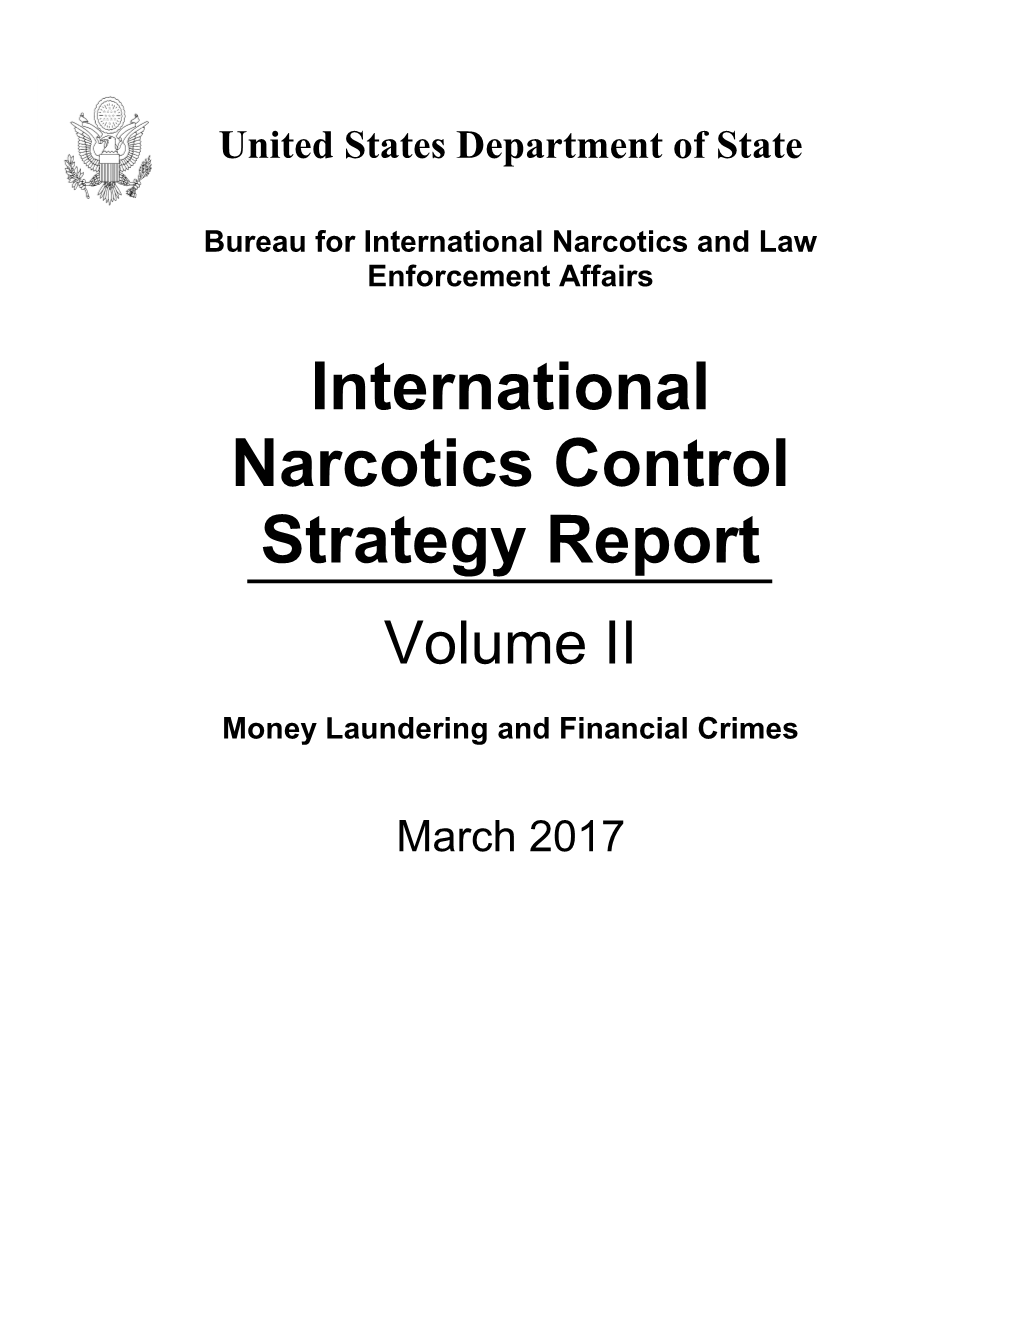 International Narcotics Control Strategy Report Volume II